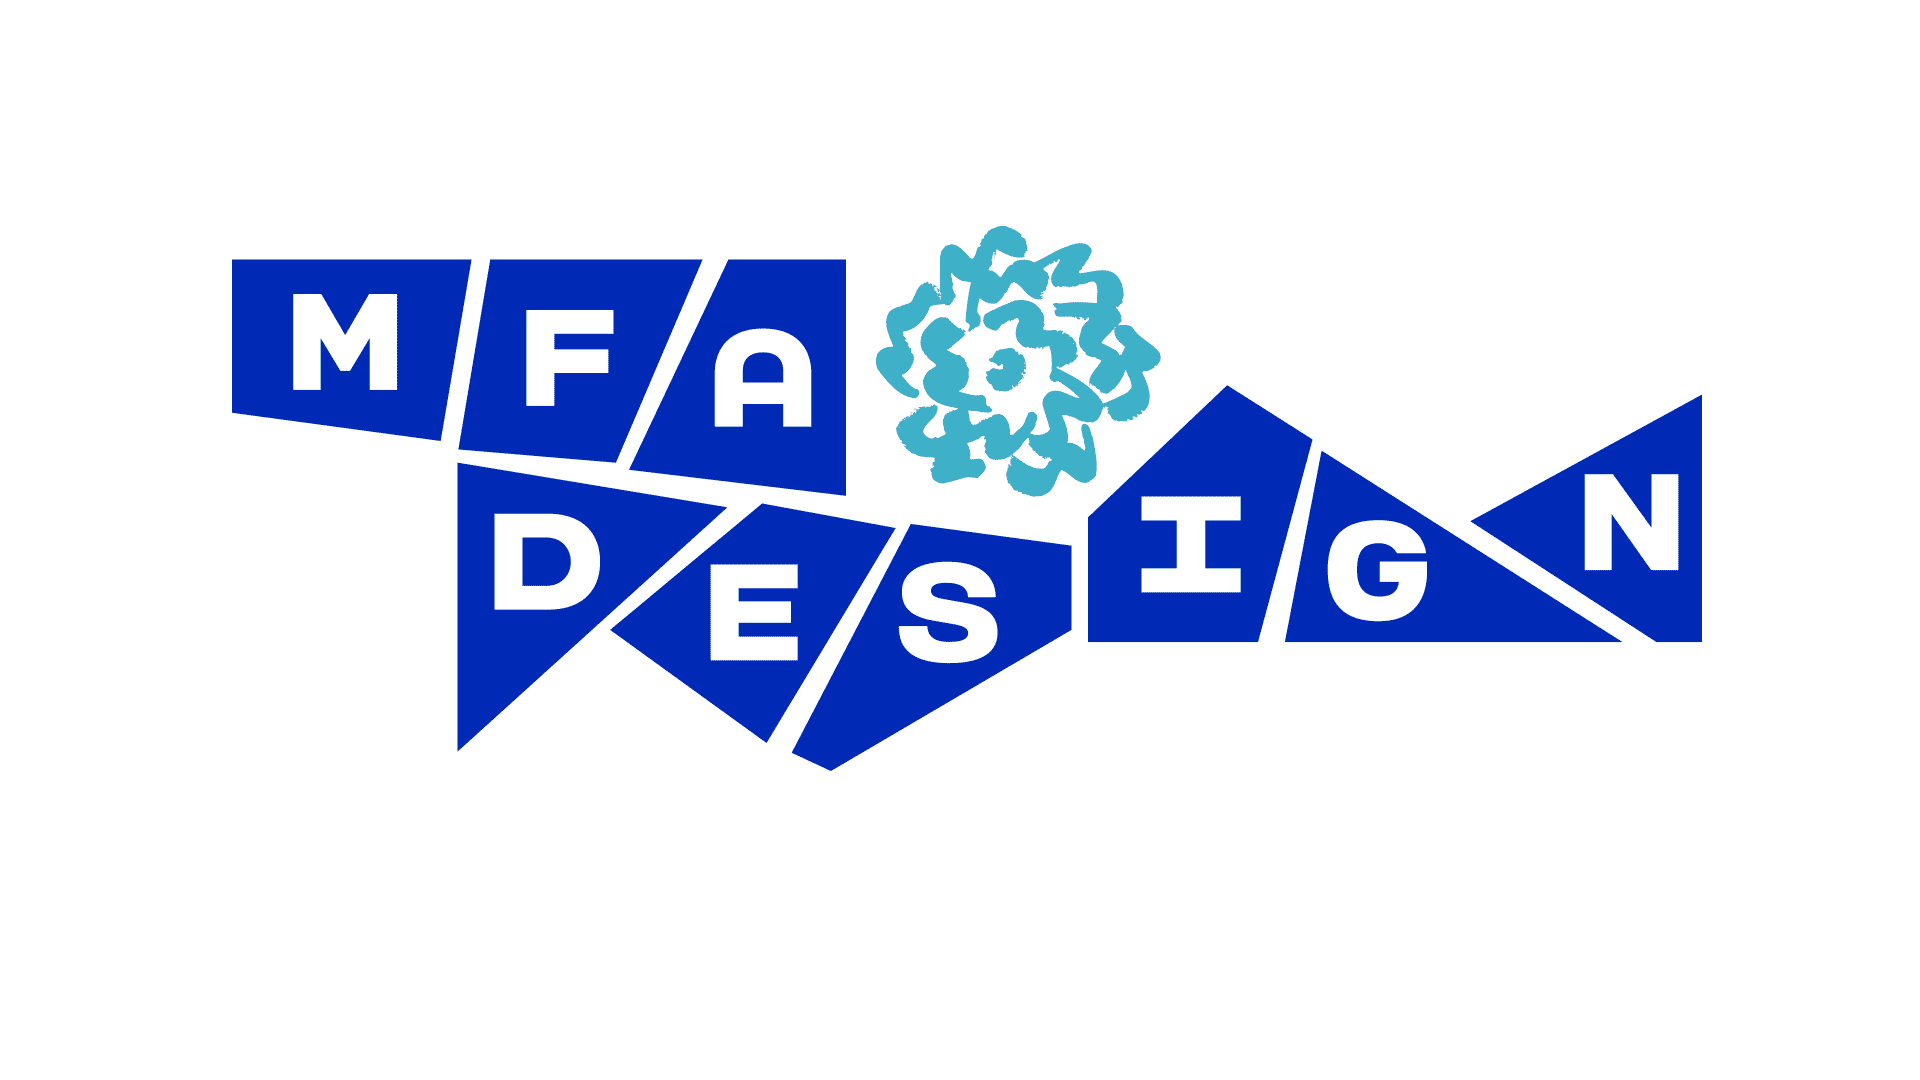 MFA Design logo